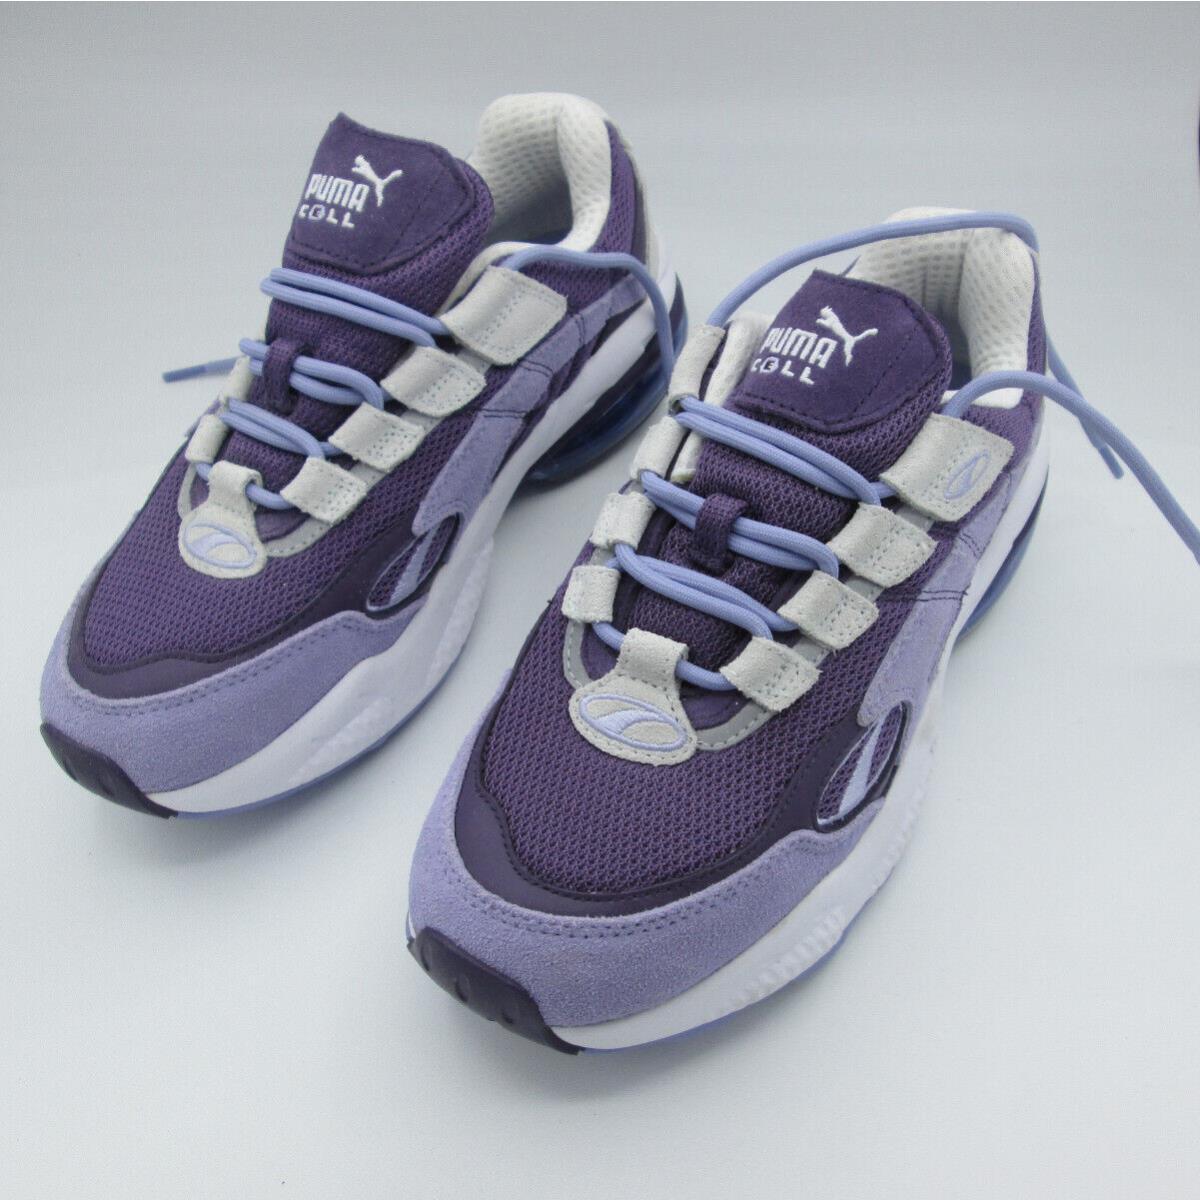 Puma Cell Venom Womens Workout Fitness Running Shoes 8.5 US Lavender/indigo